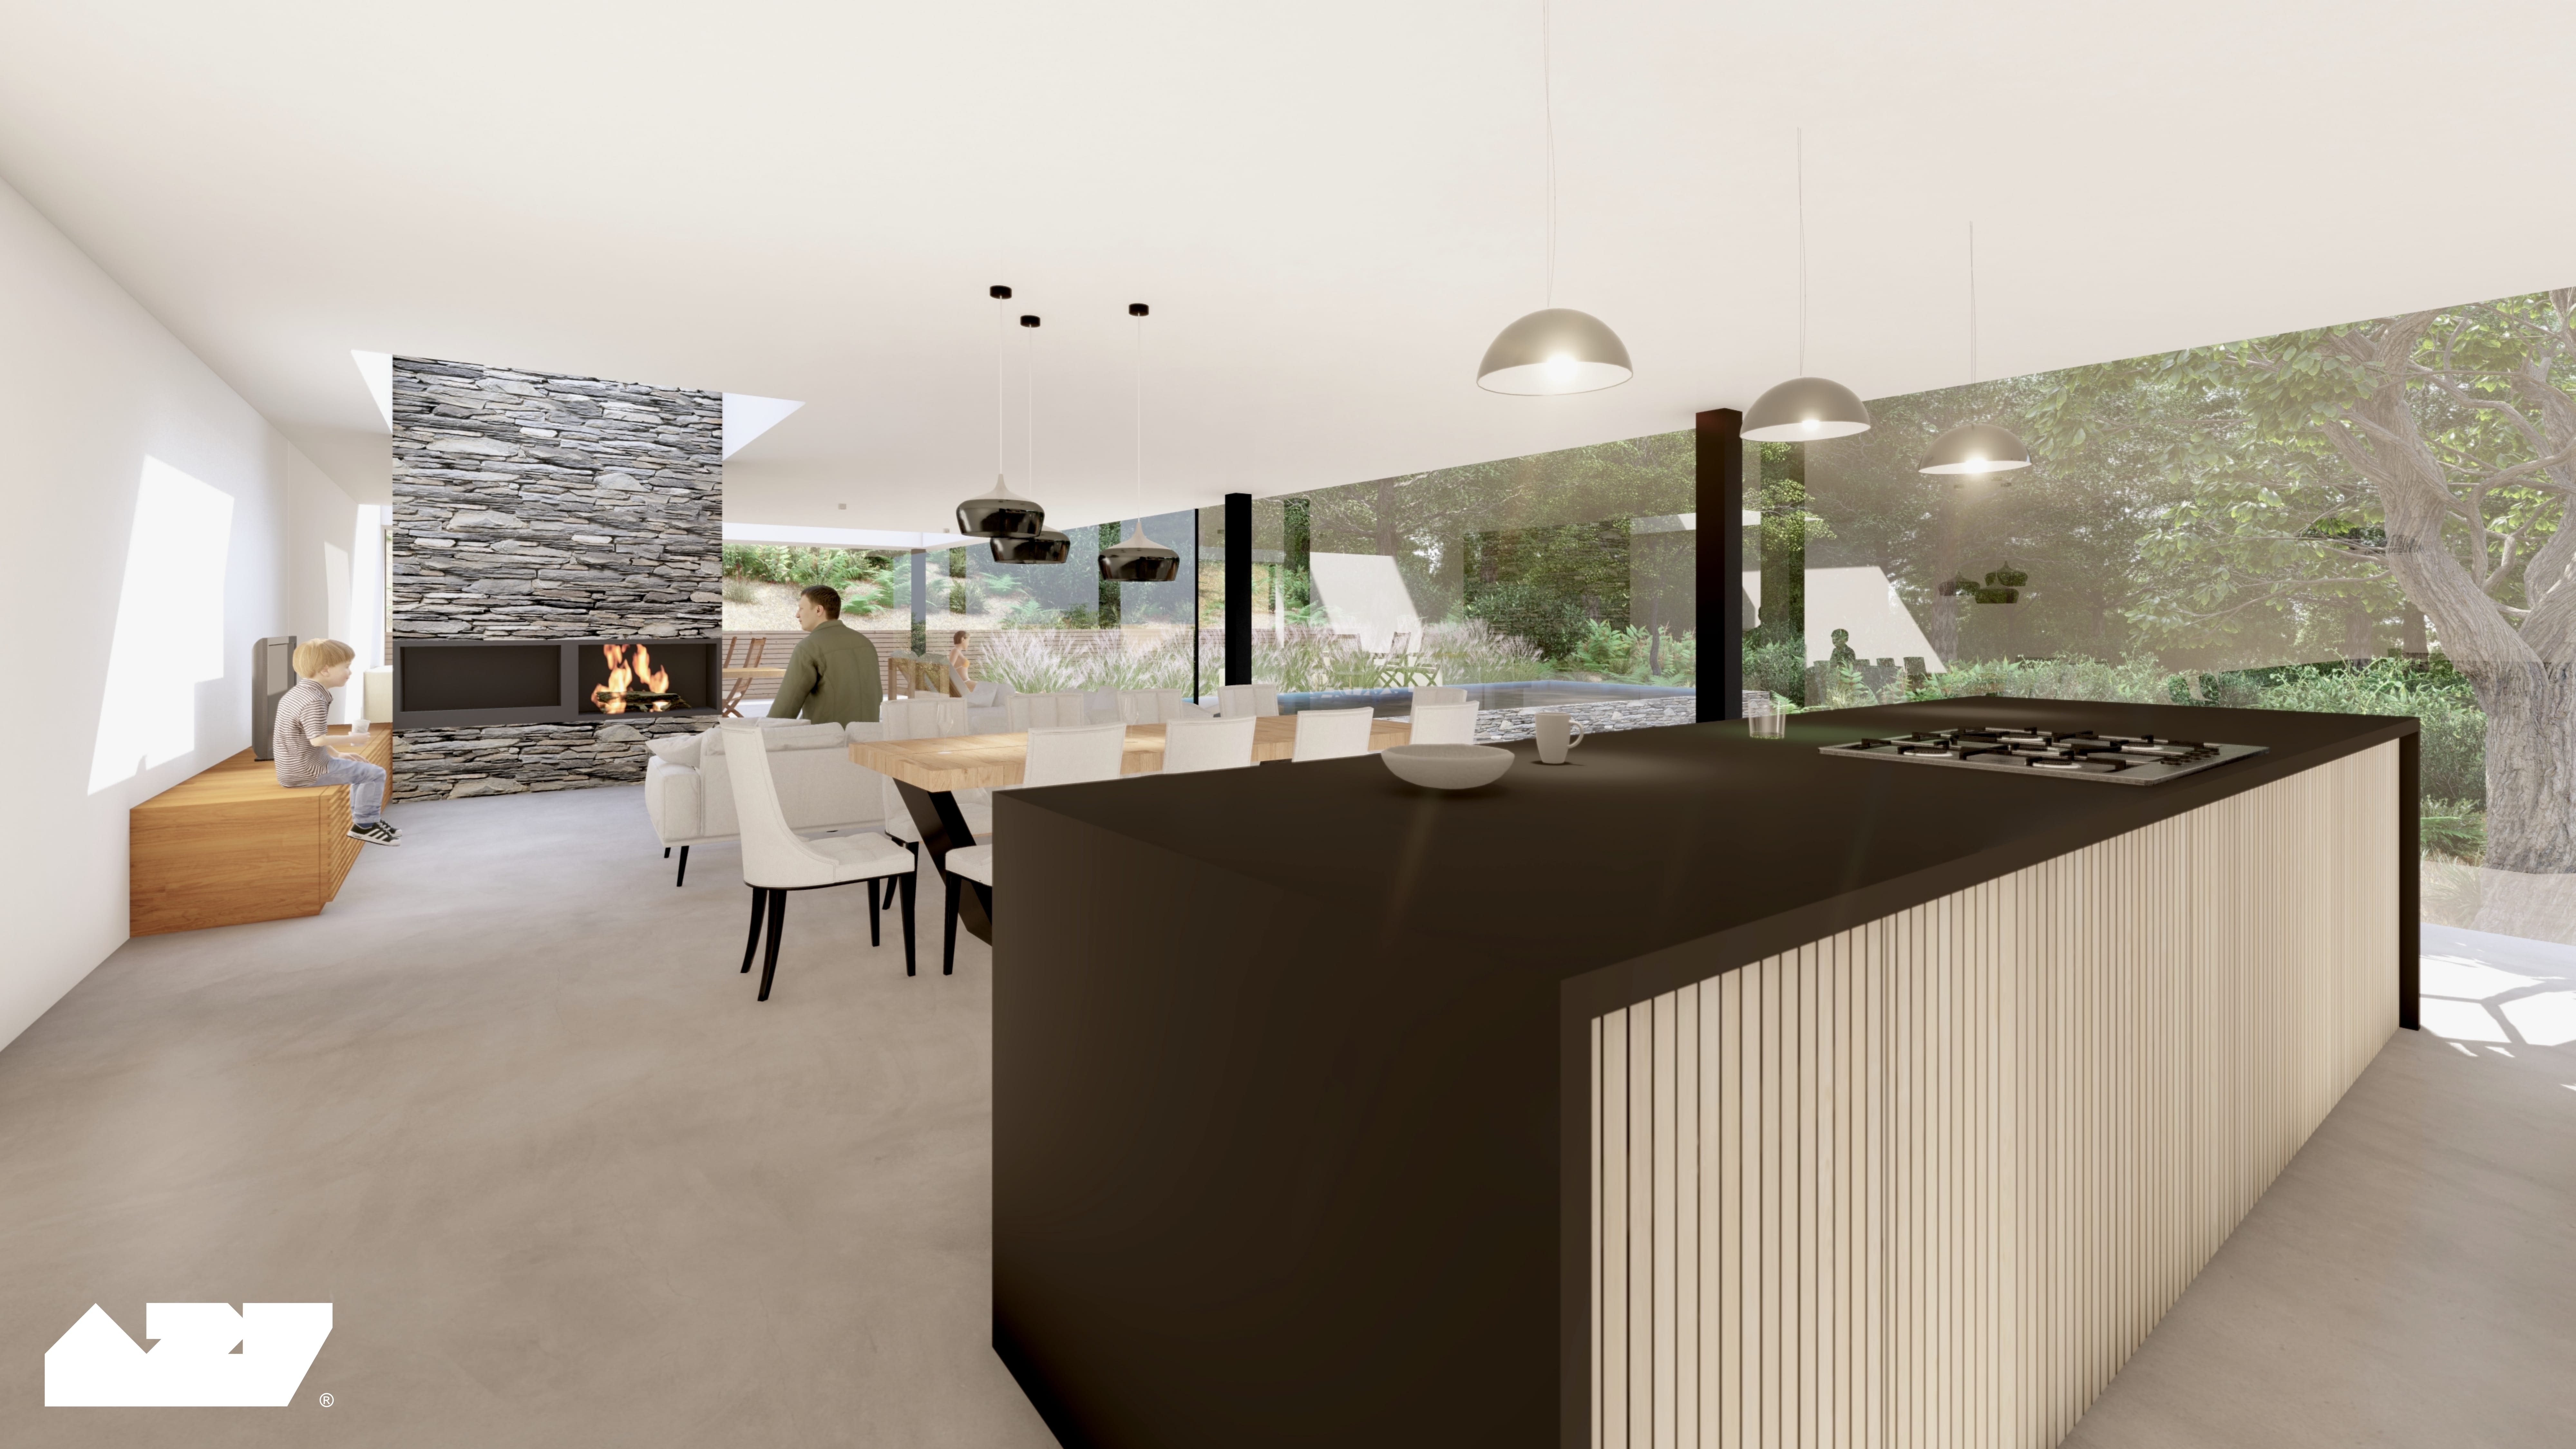 Bardage-bois-villa-spa-contemporain-a27-architecte-foret-projet5-1